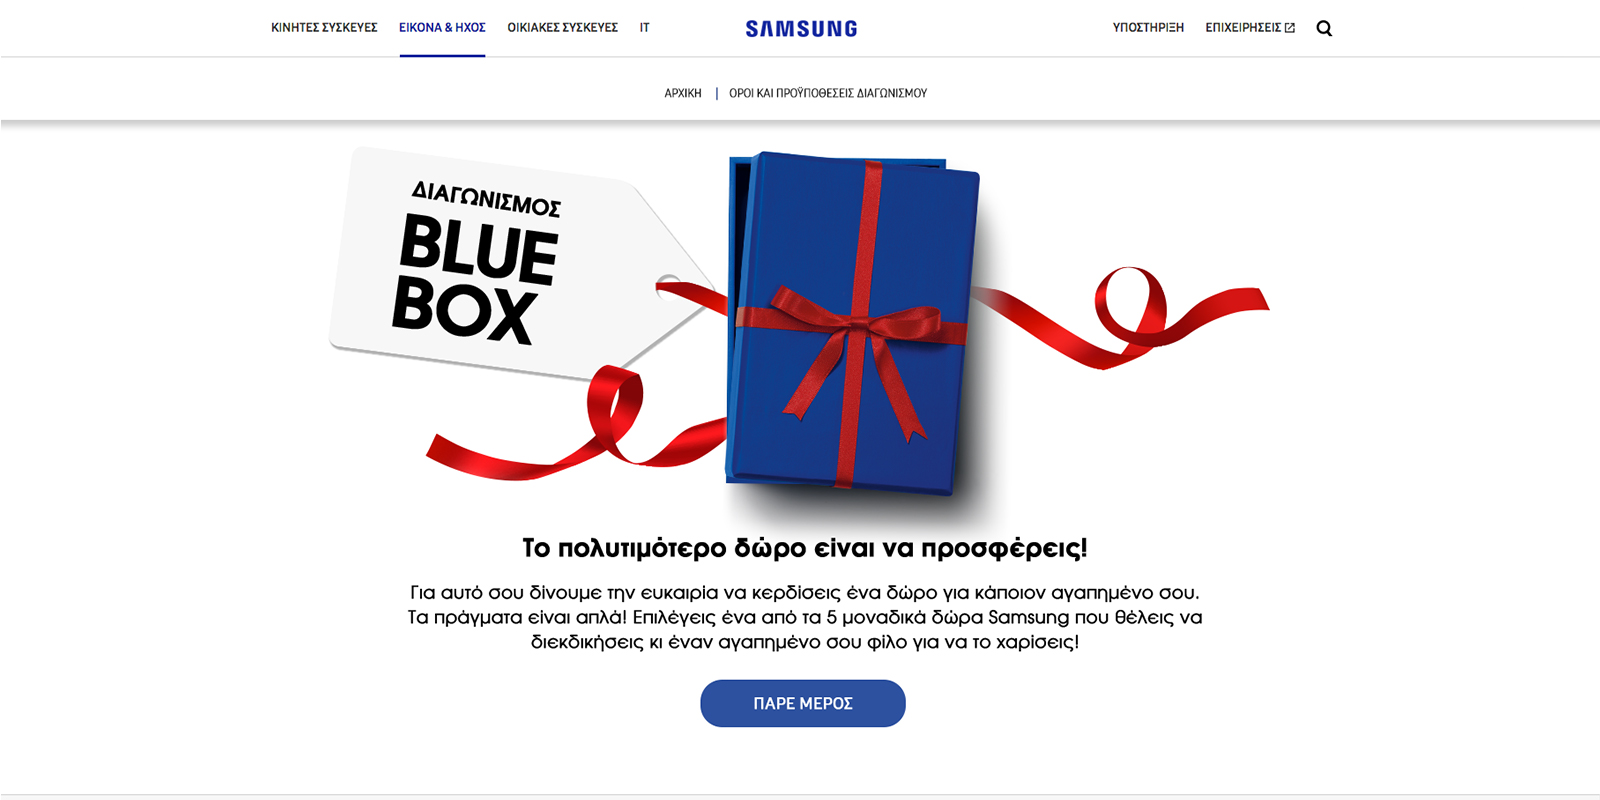 SAMSUNG - Bluebox Contest